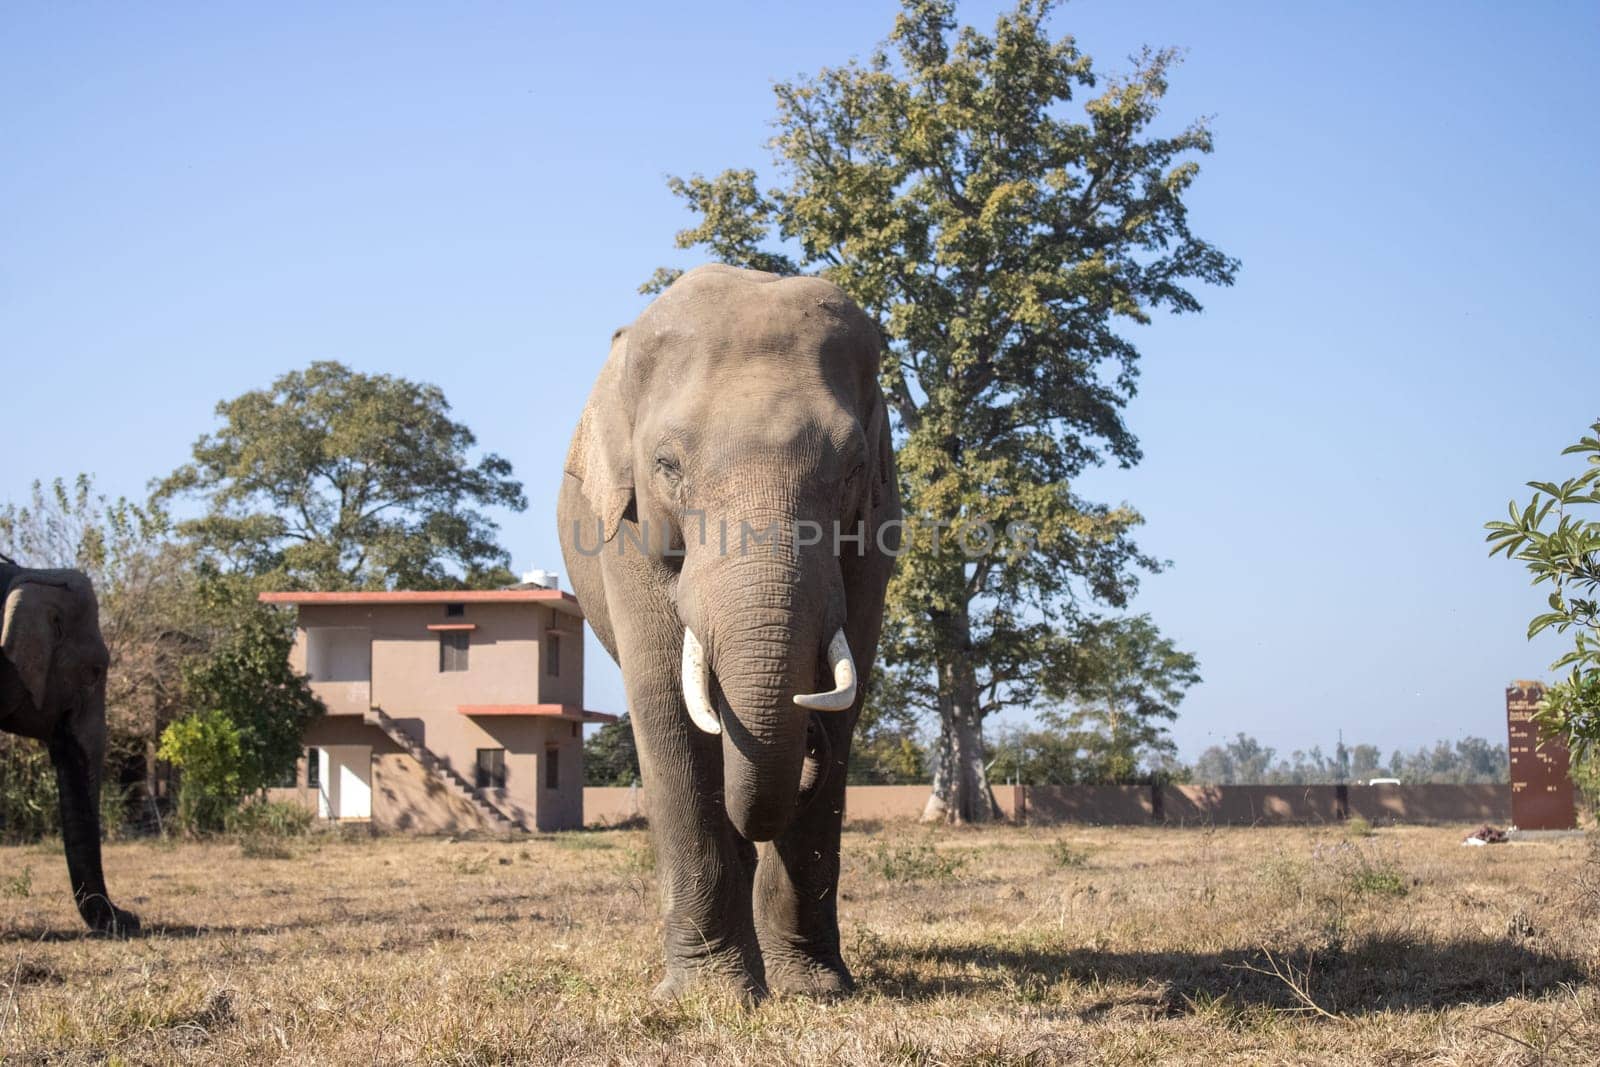 A Beautiful Journey with Elephants in Uttarakhand by stocksvids